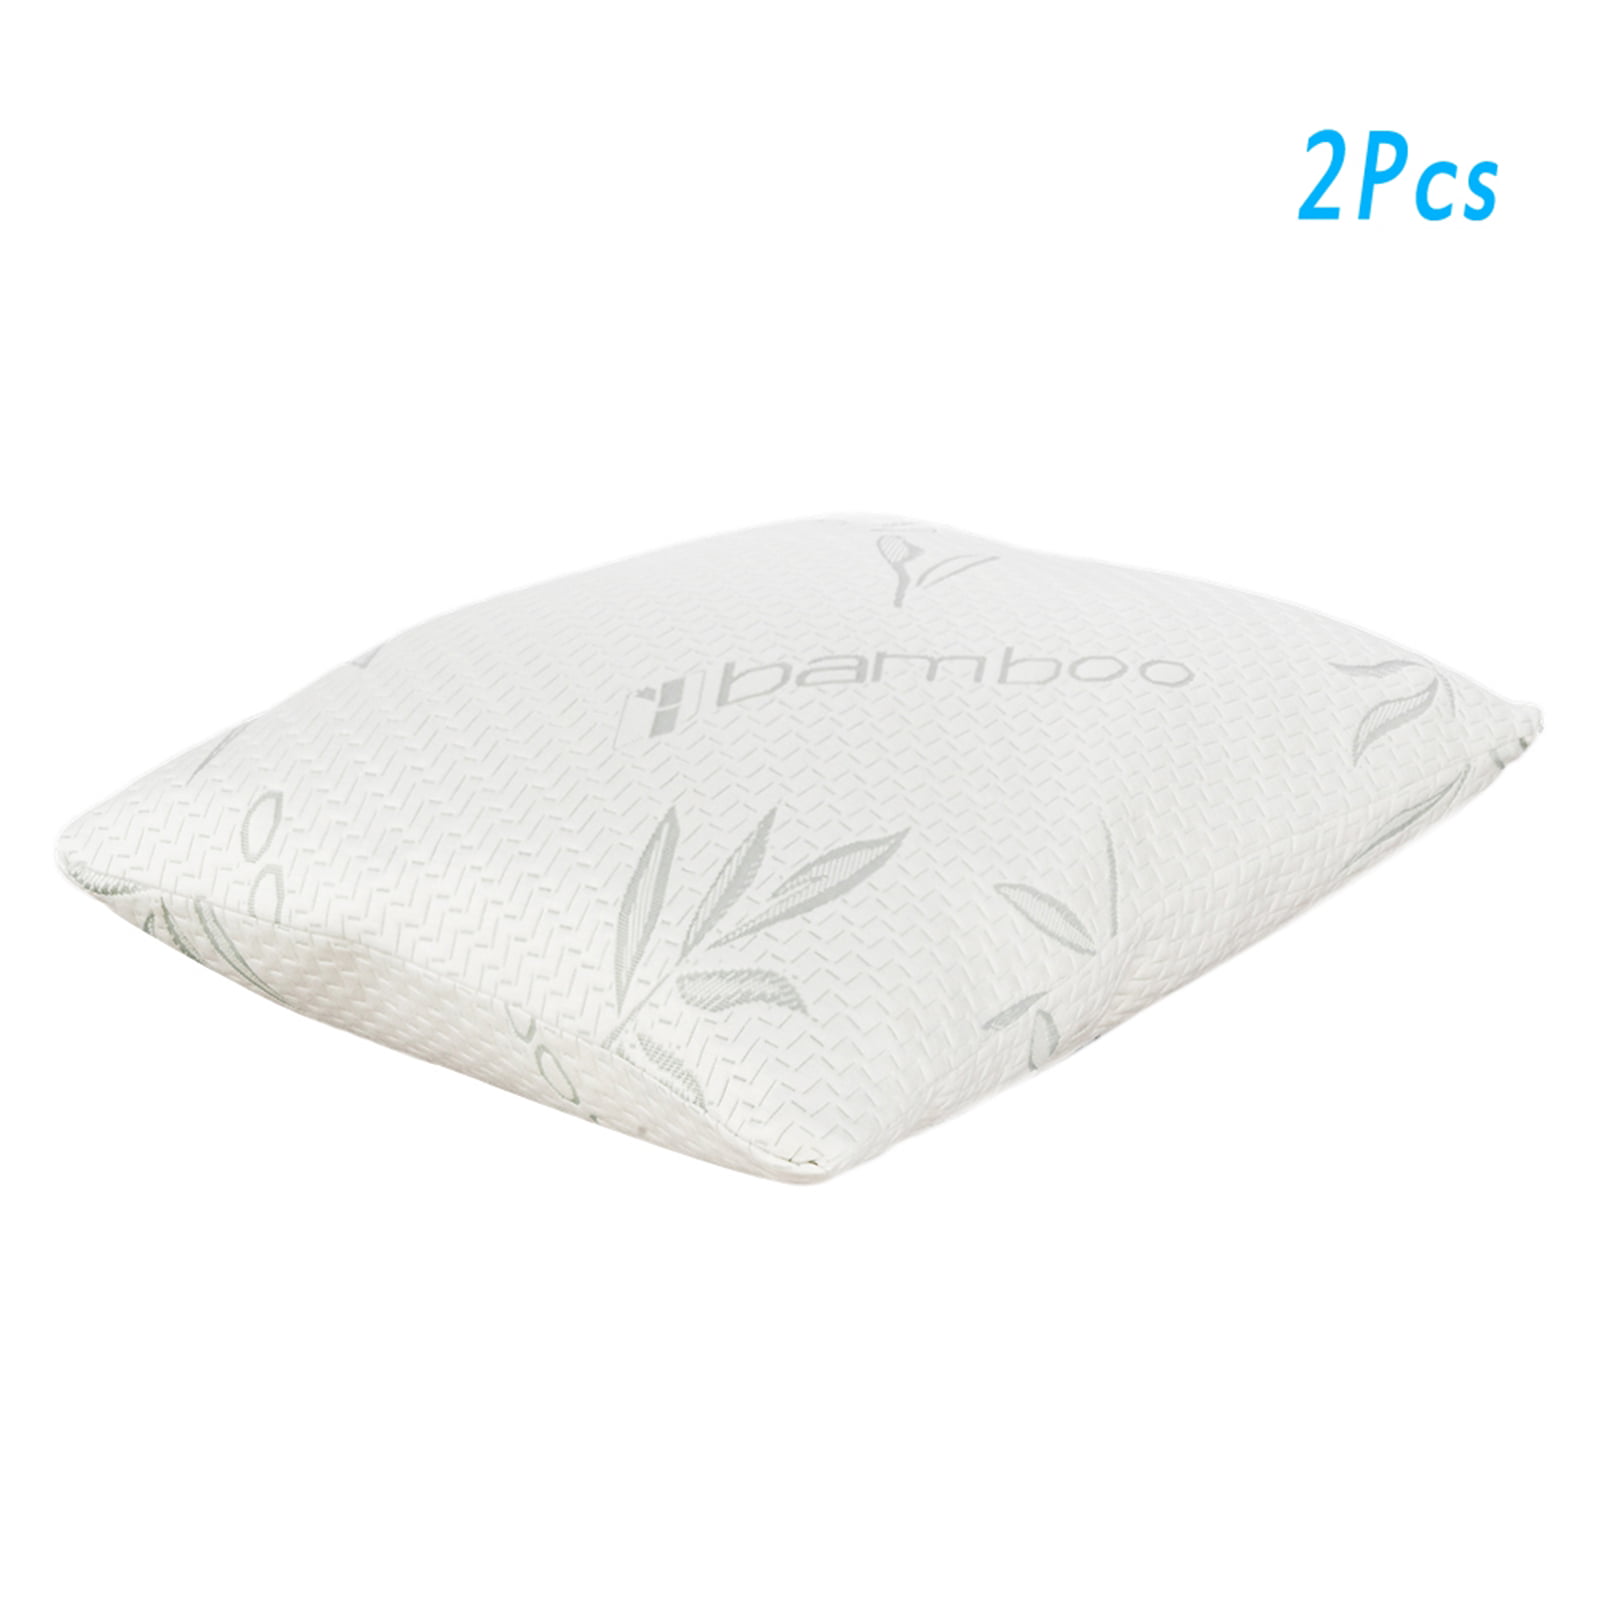 2PCS King Size Original Bamboo Memory Foam Pillow Hypoallergenic w/ Carry Bag 